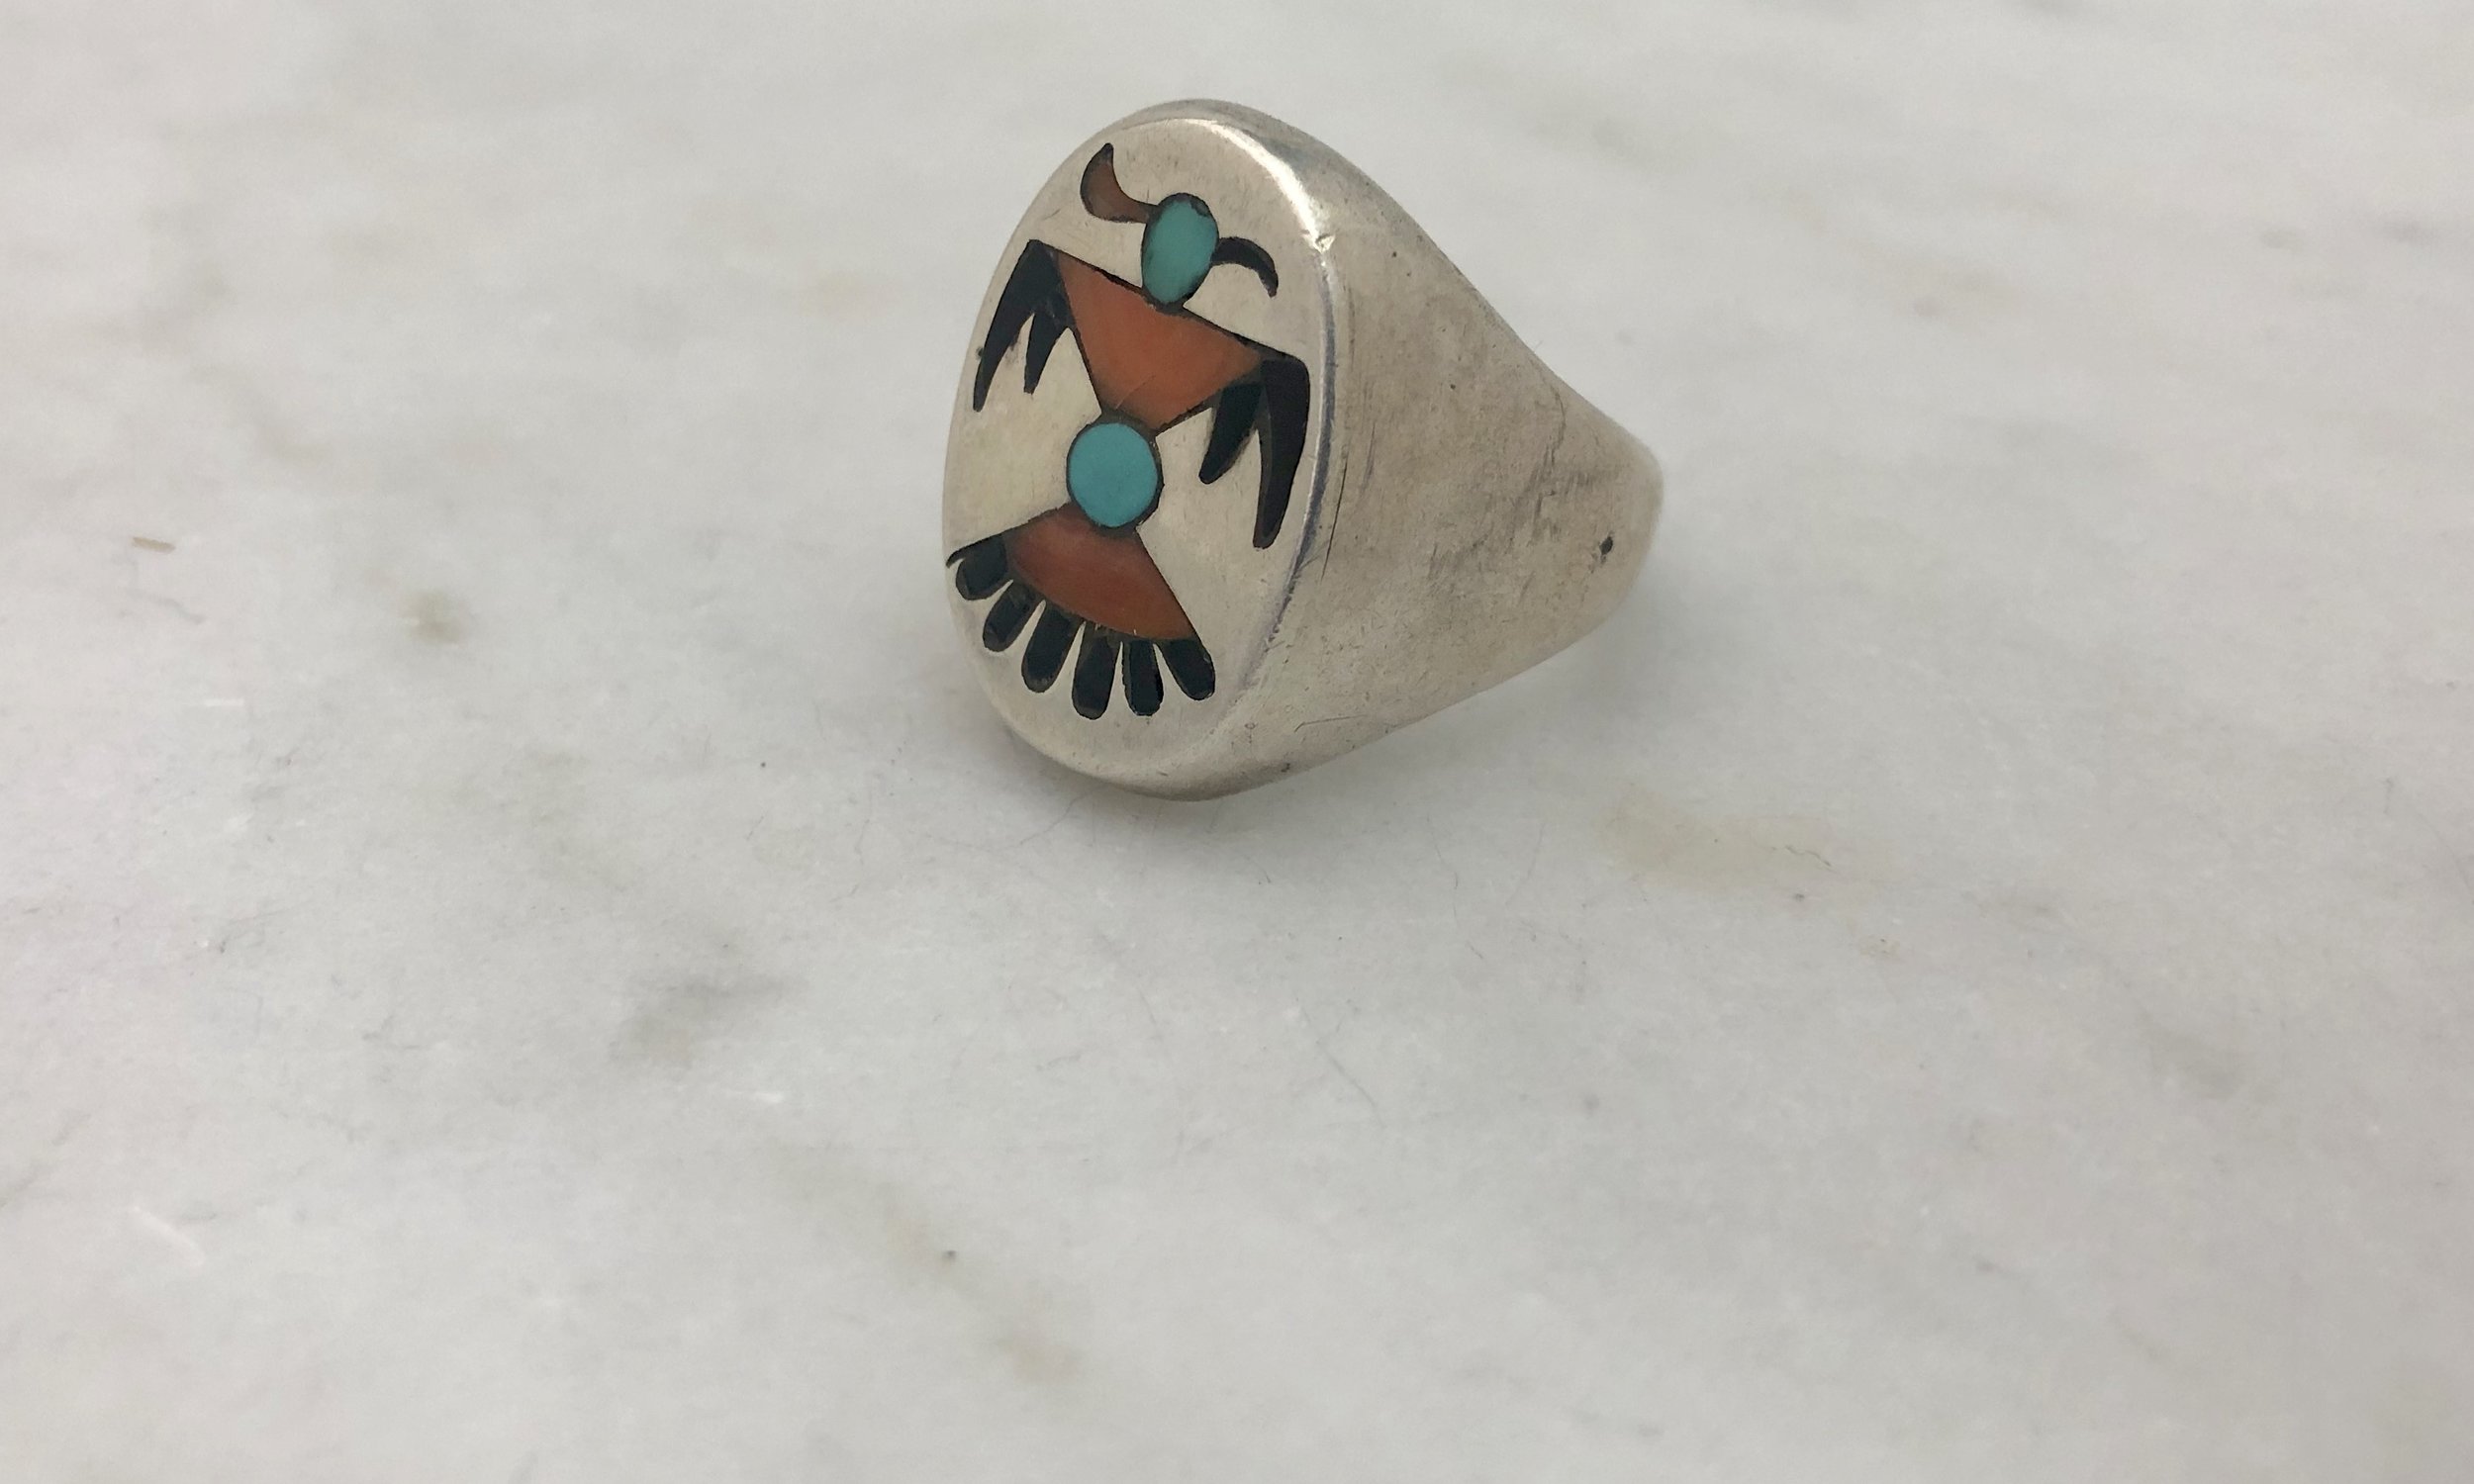 Zuni Vintage Multi-Stone Thunderbird Earrings